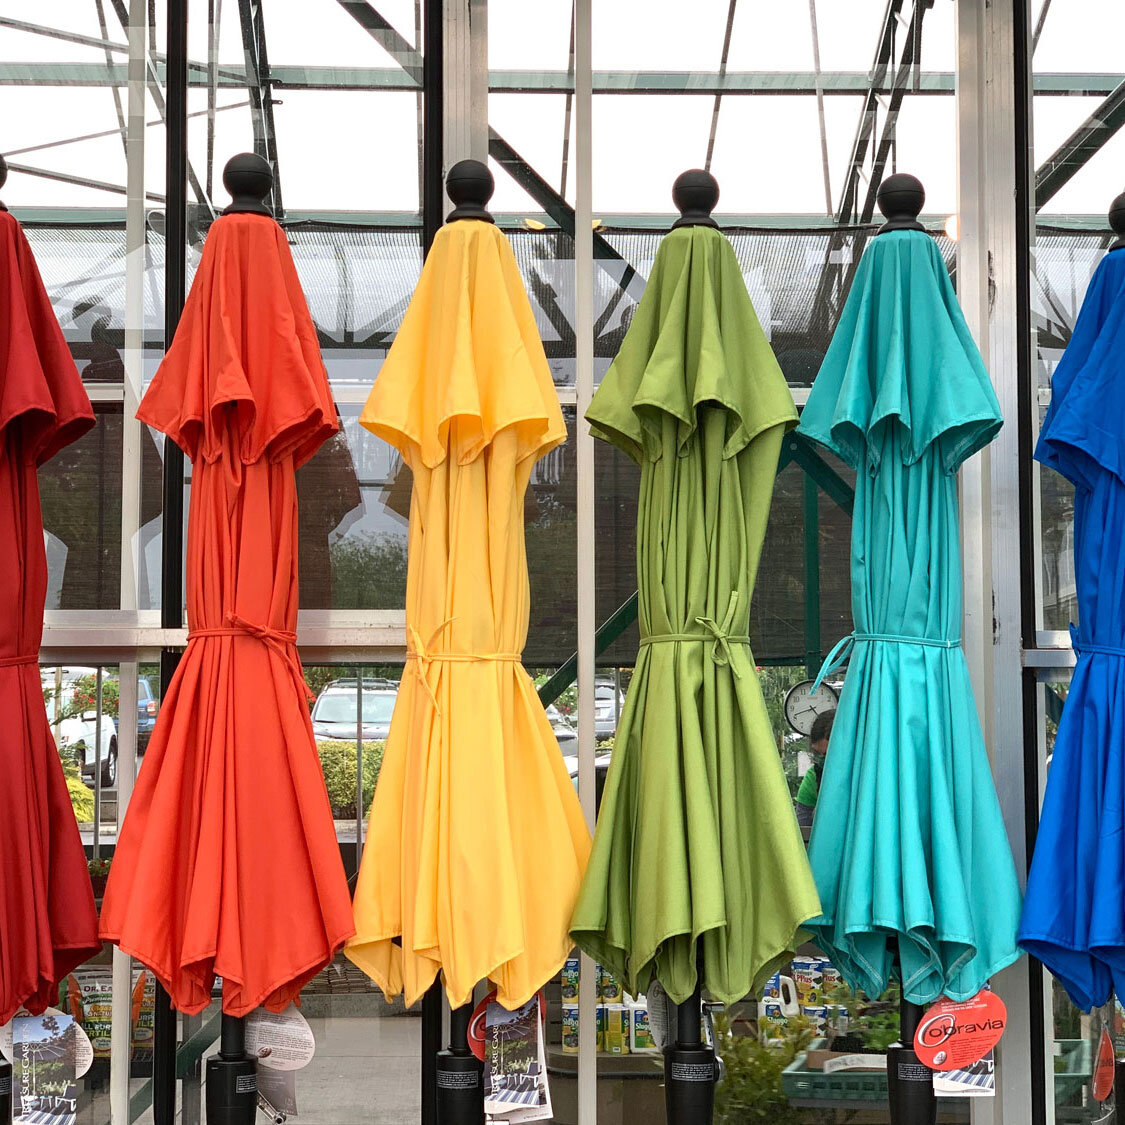 Colorful Patio Umbrellas at Swansons Nursery